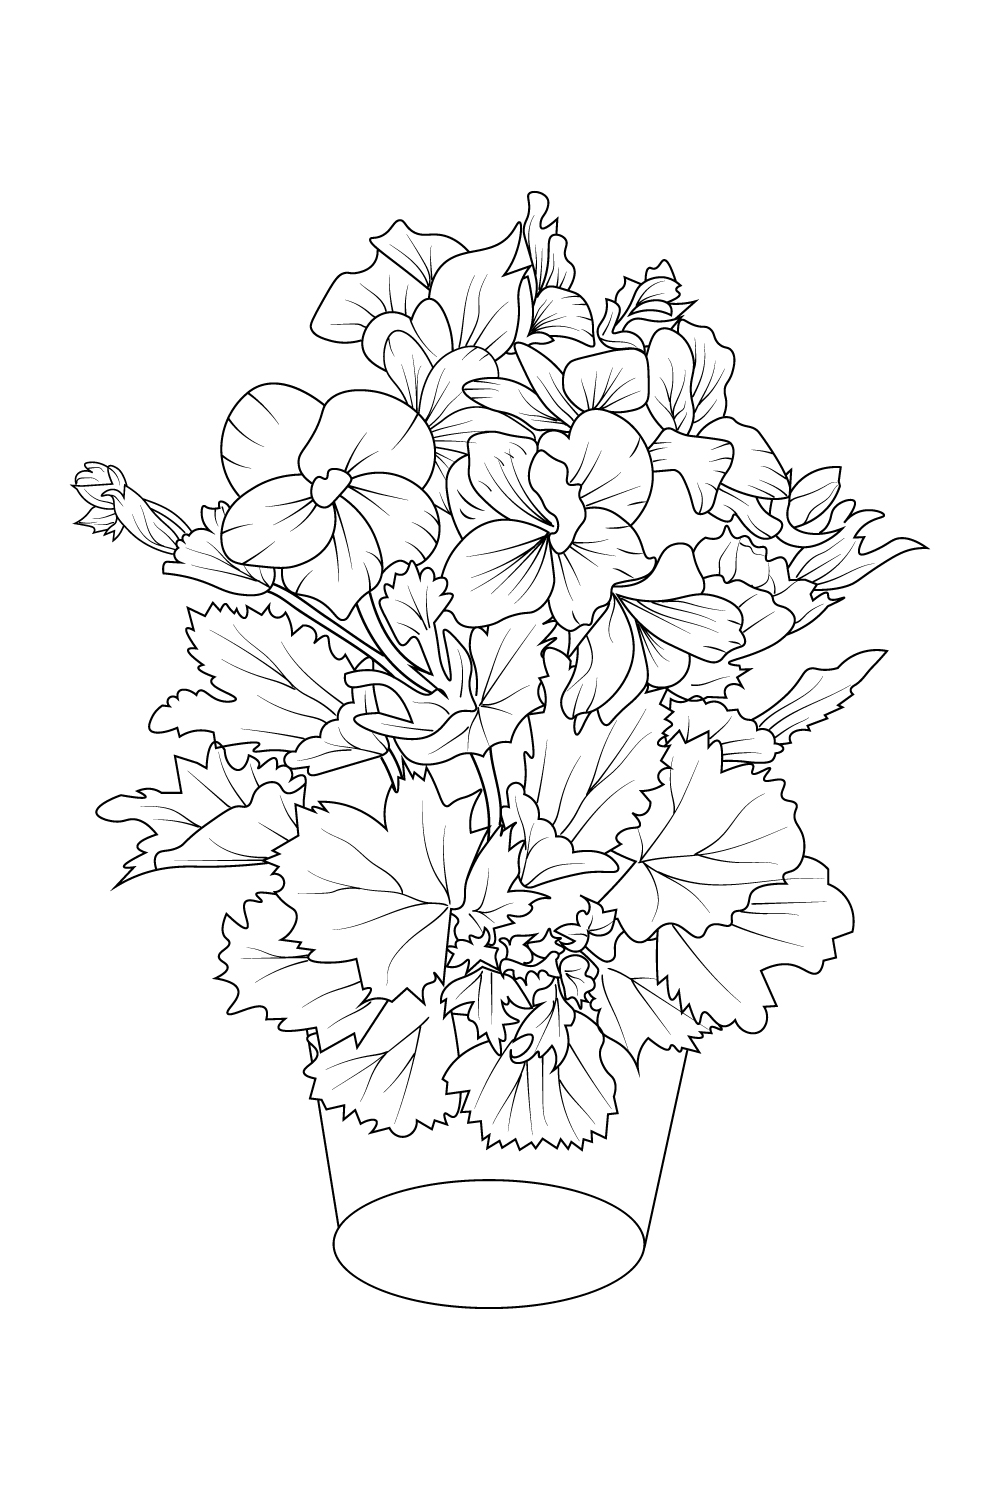 Drawing geranium illustration, geranium flower bouquet, line art geranium flower, outline drawing geranium, geranium flower pencil sketch, realistic geranium flower drawing pinterest preview image.